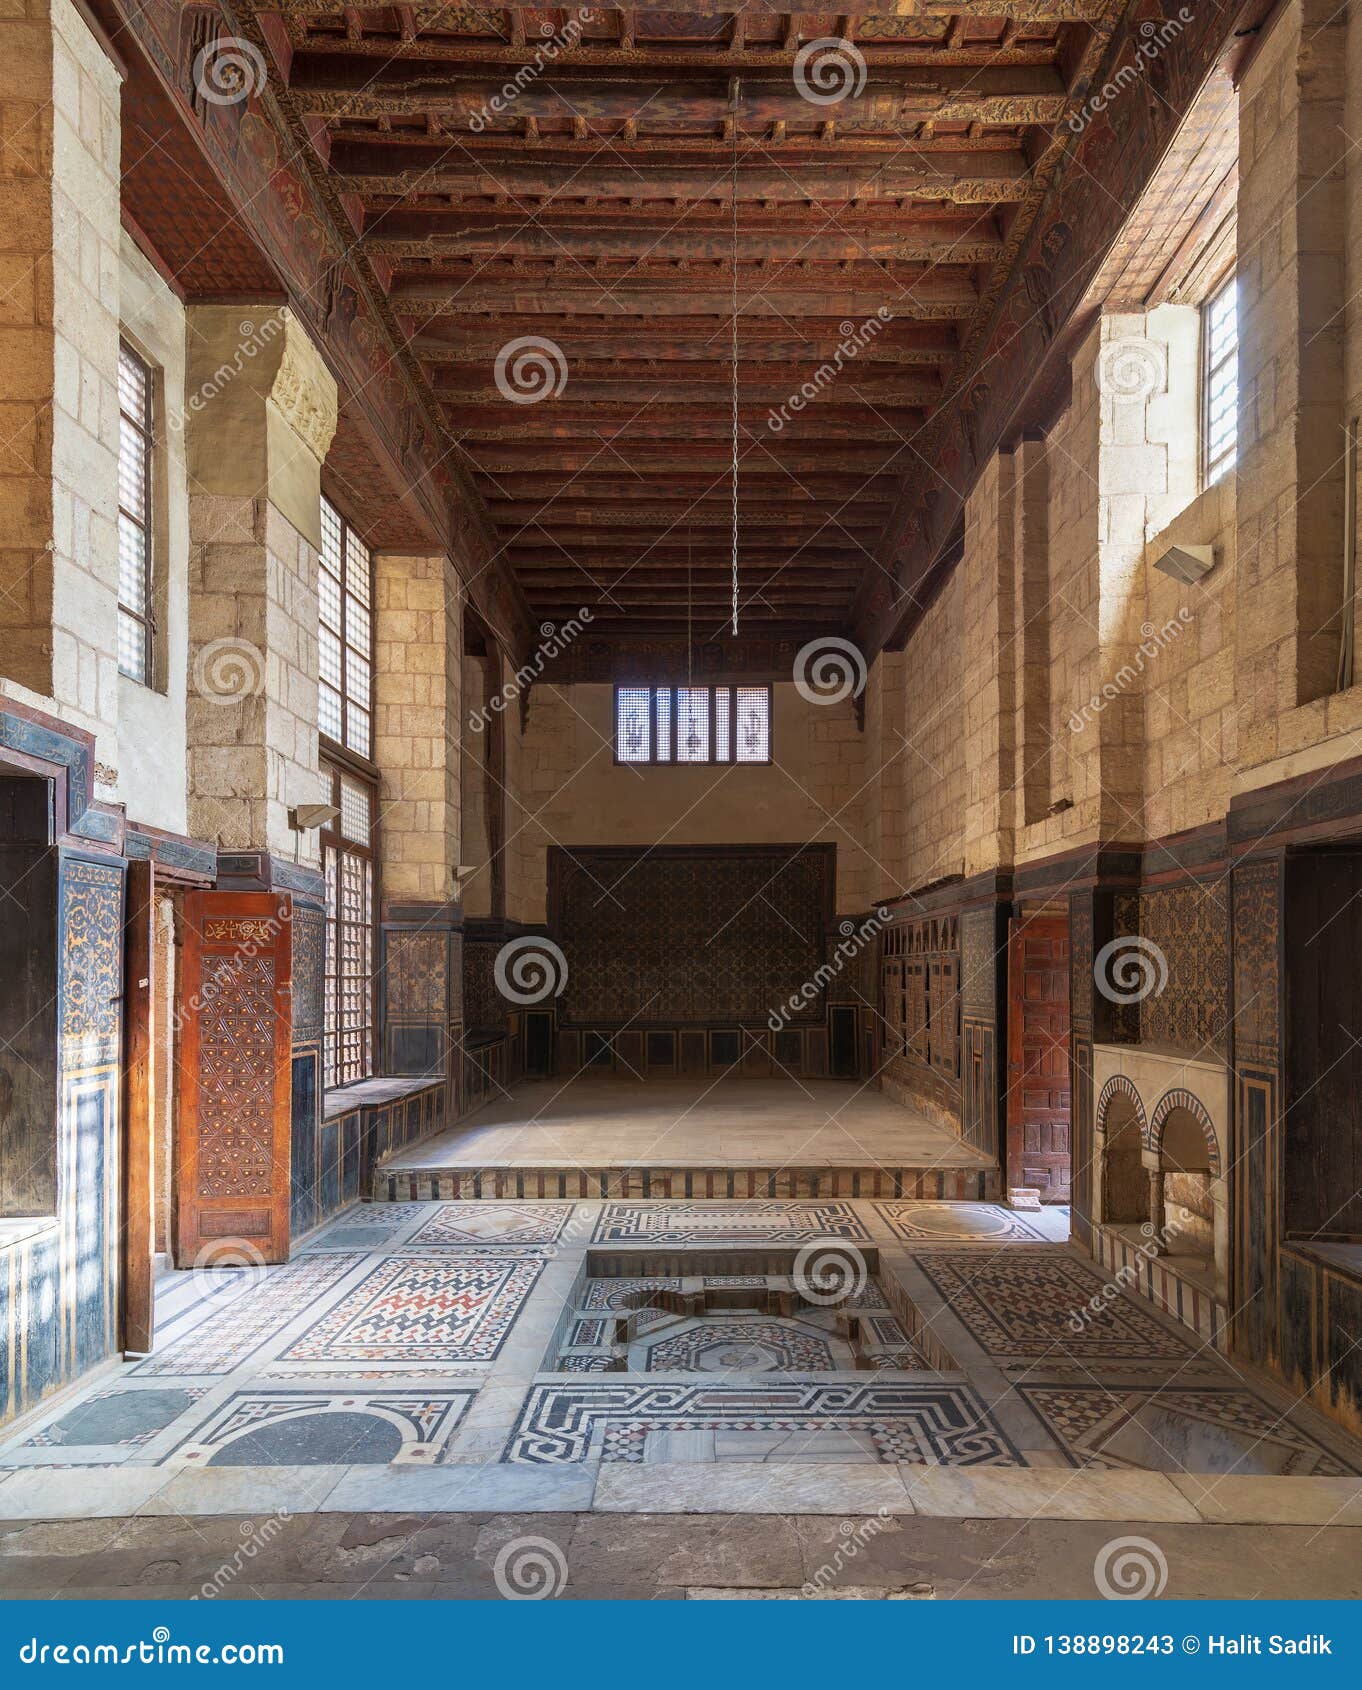 hall at ottoman era historic house of moustafa gaafar al seleehdar, cairo, egypt with decorated ceiling and ornate marble floor